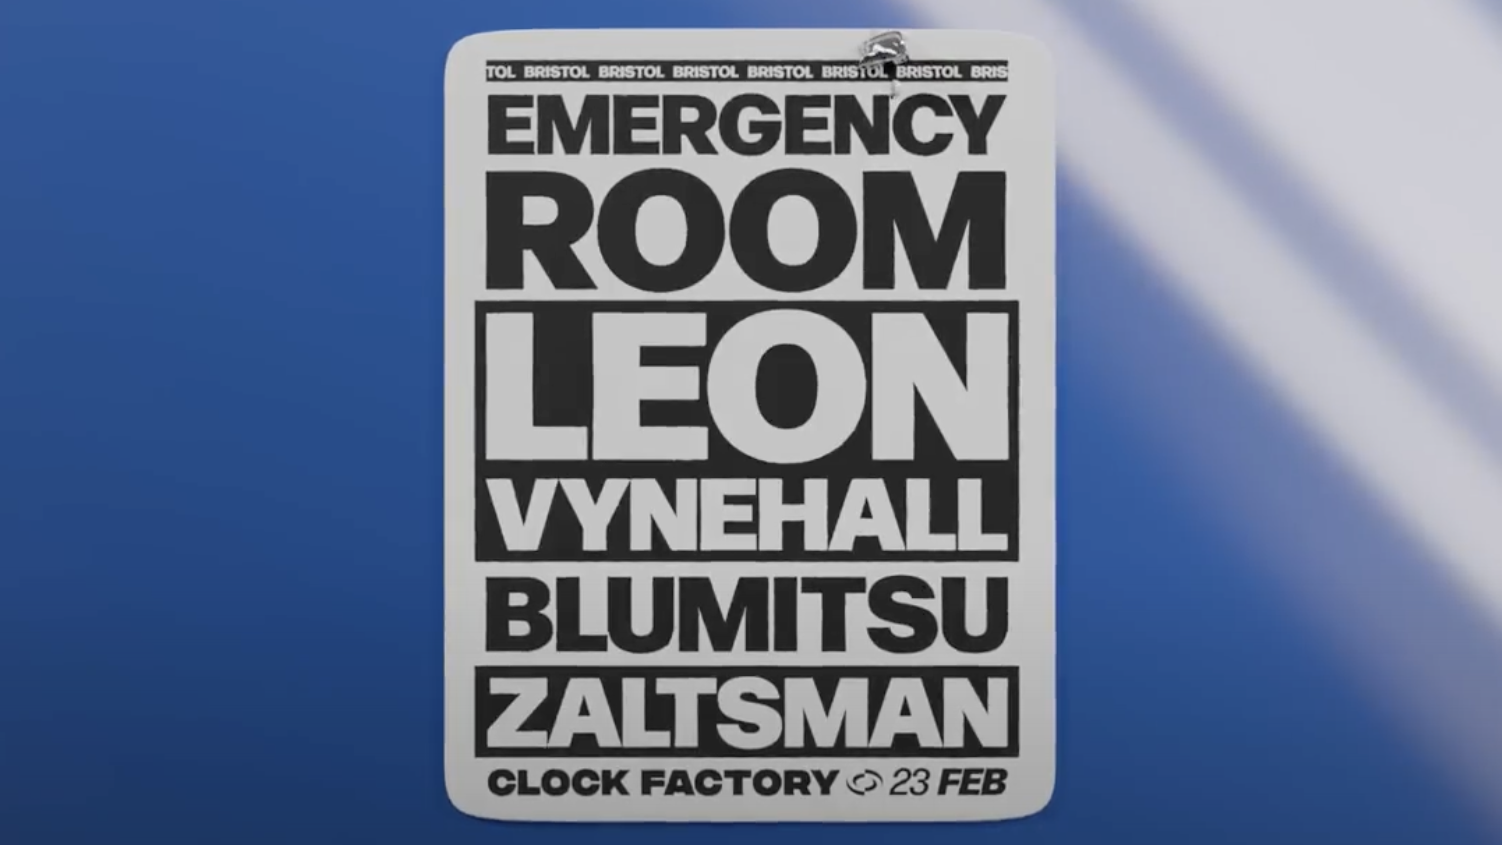 Emergency Room w/ Leon Vynehall & Blumitsu